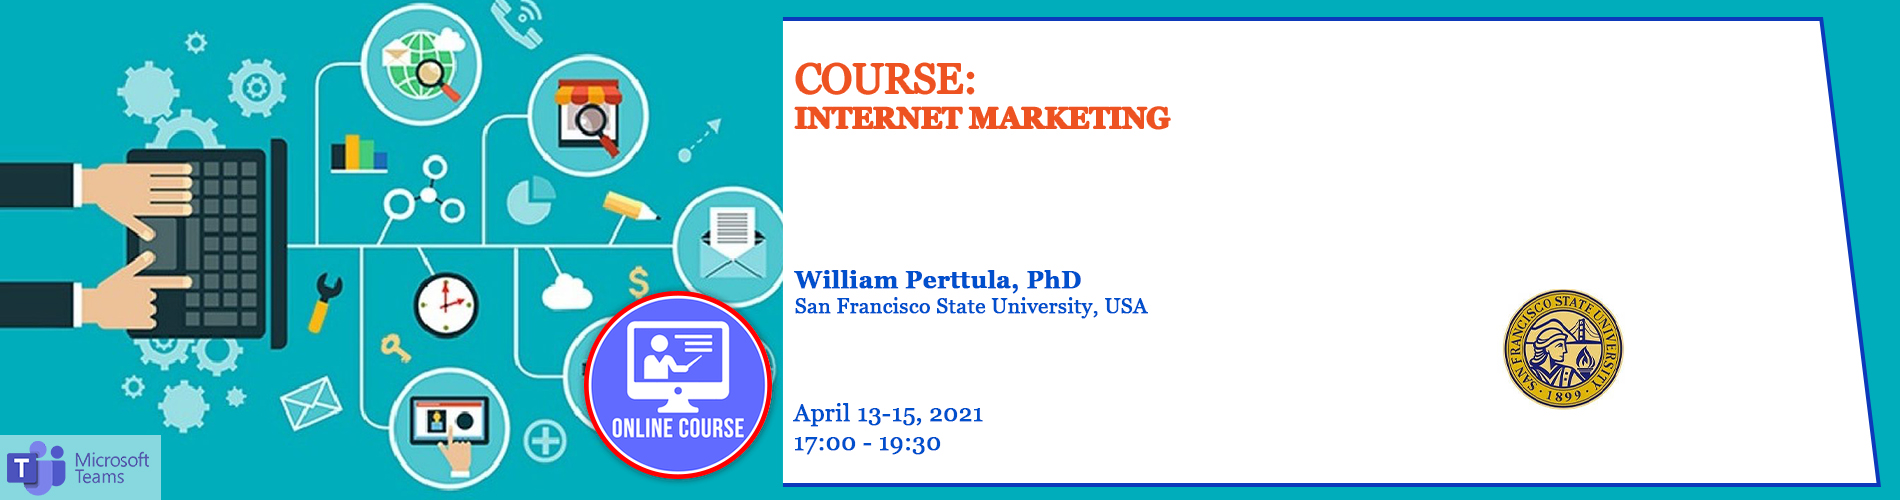 2021.04.13-04.15 Internet Marketing